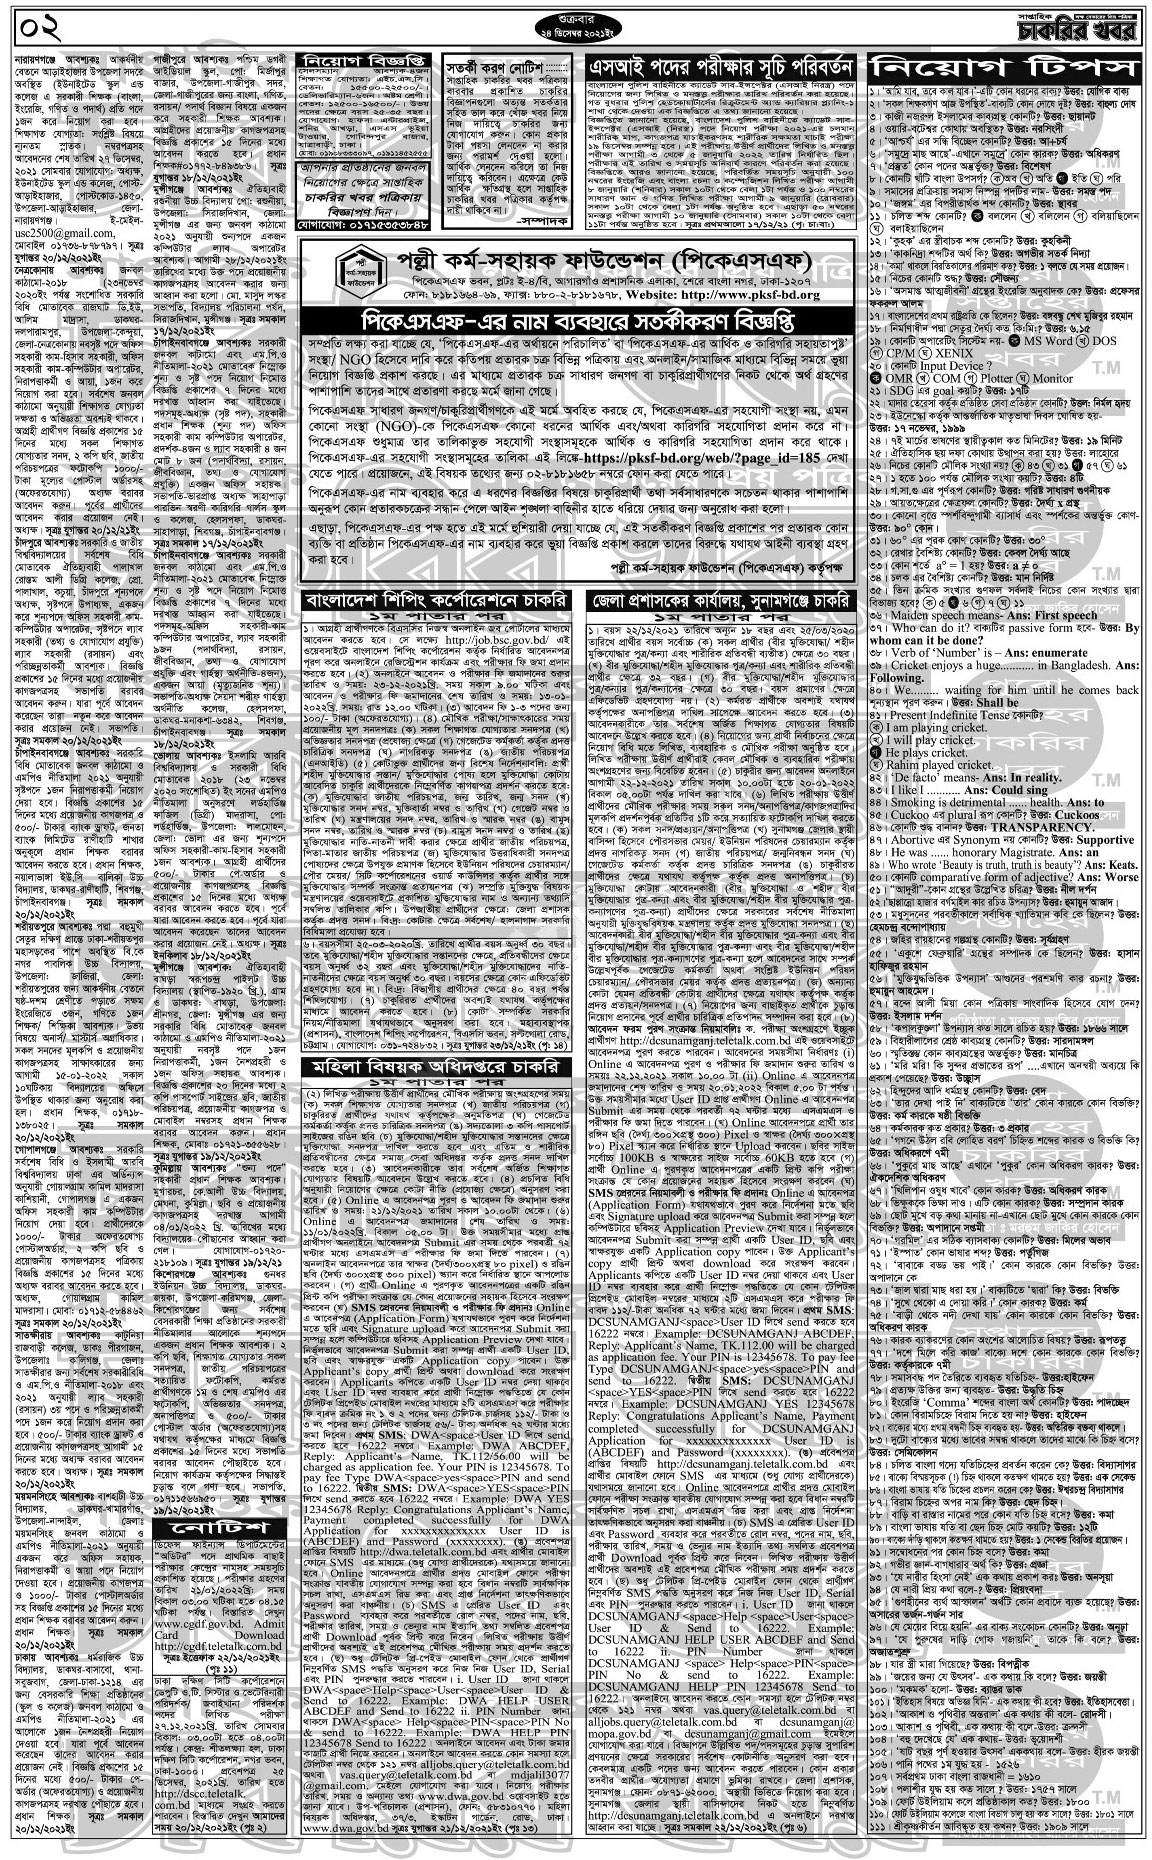 Saptahik Chakrir Khobor Newspaper has been published on the 24th December, 2021